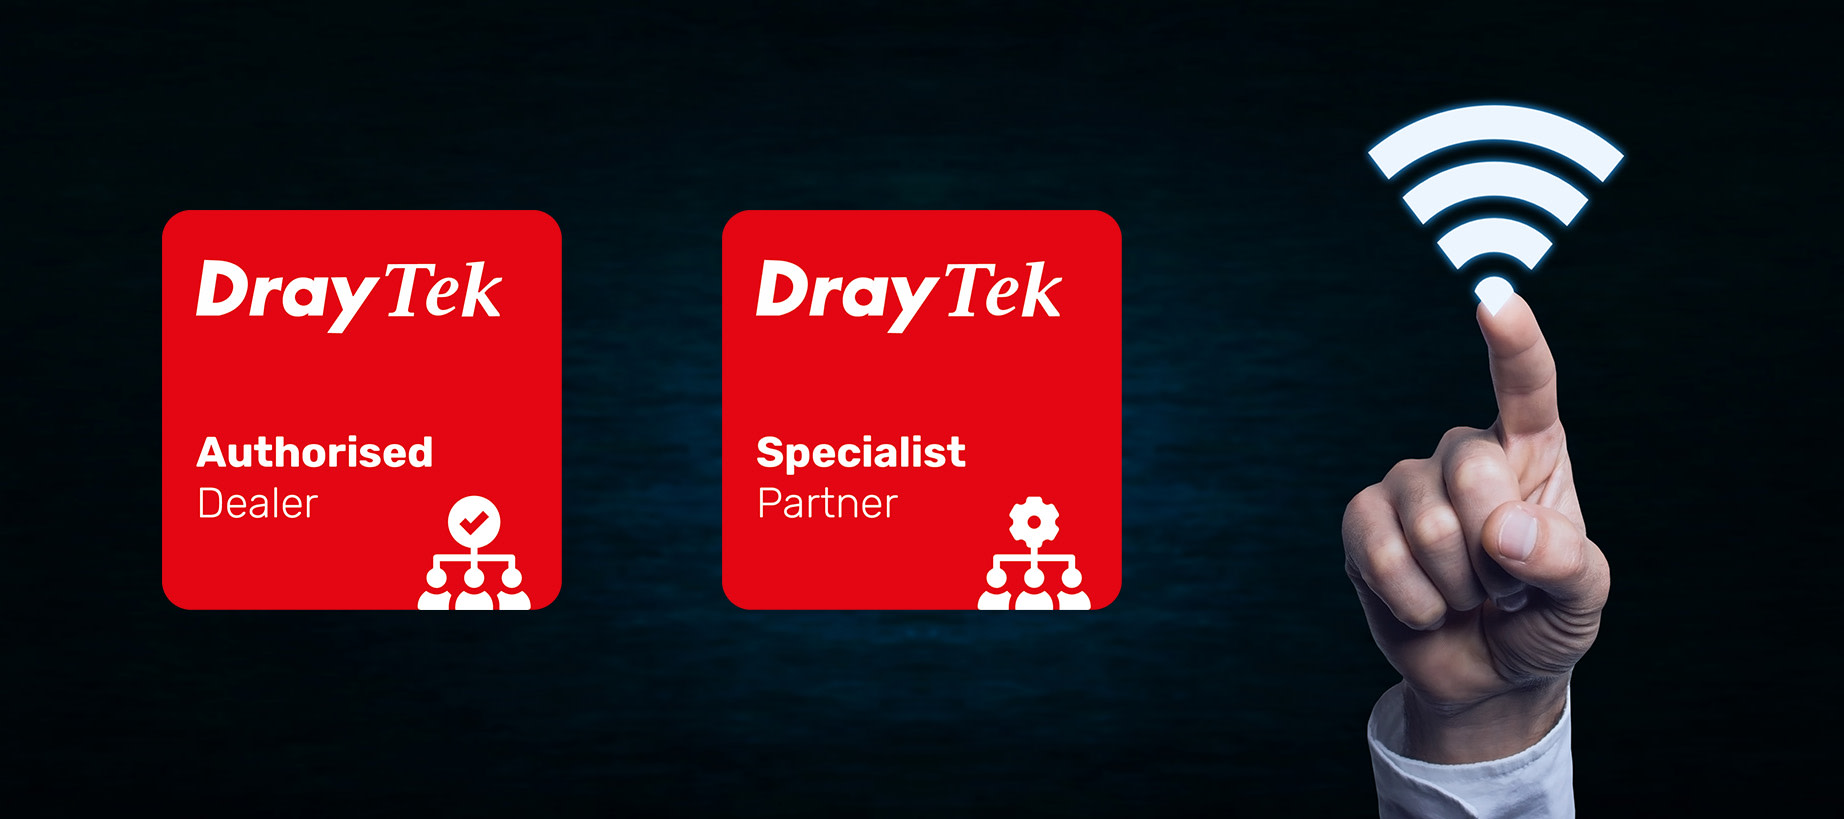 Draytek Approved Dealer and Draytek Specialist Partner in Rickmansworth, Hertfordshire, United Kingdom